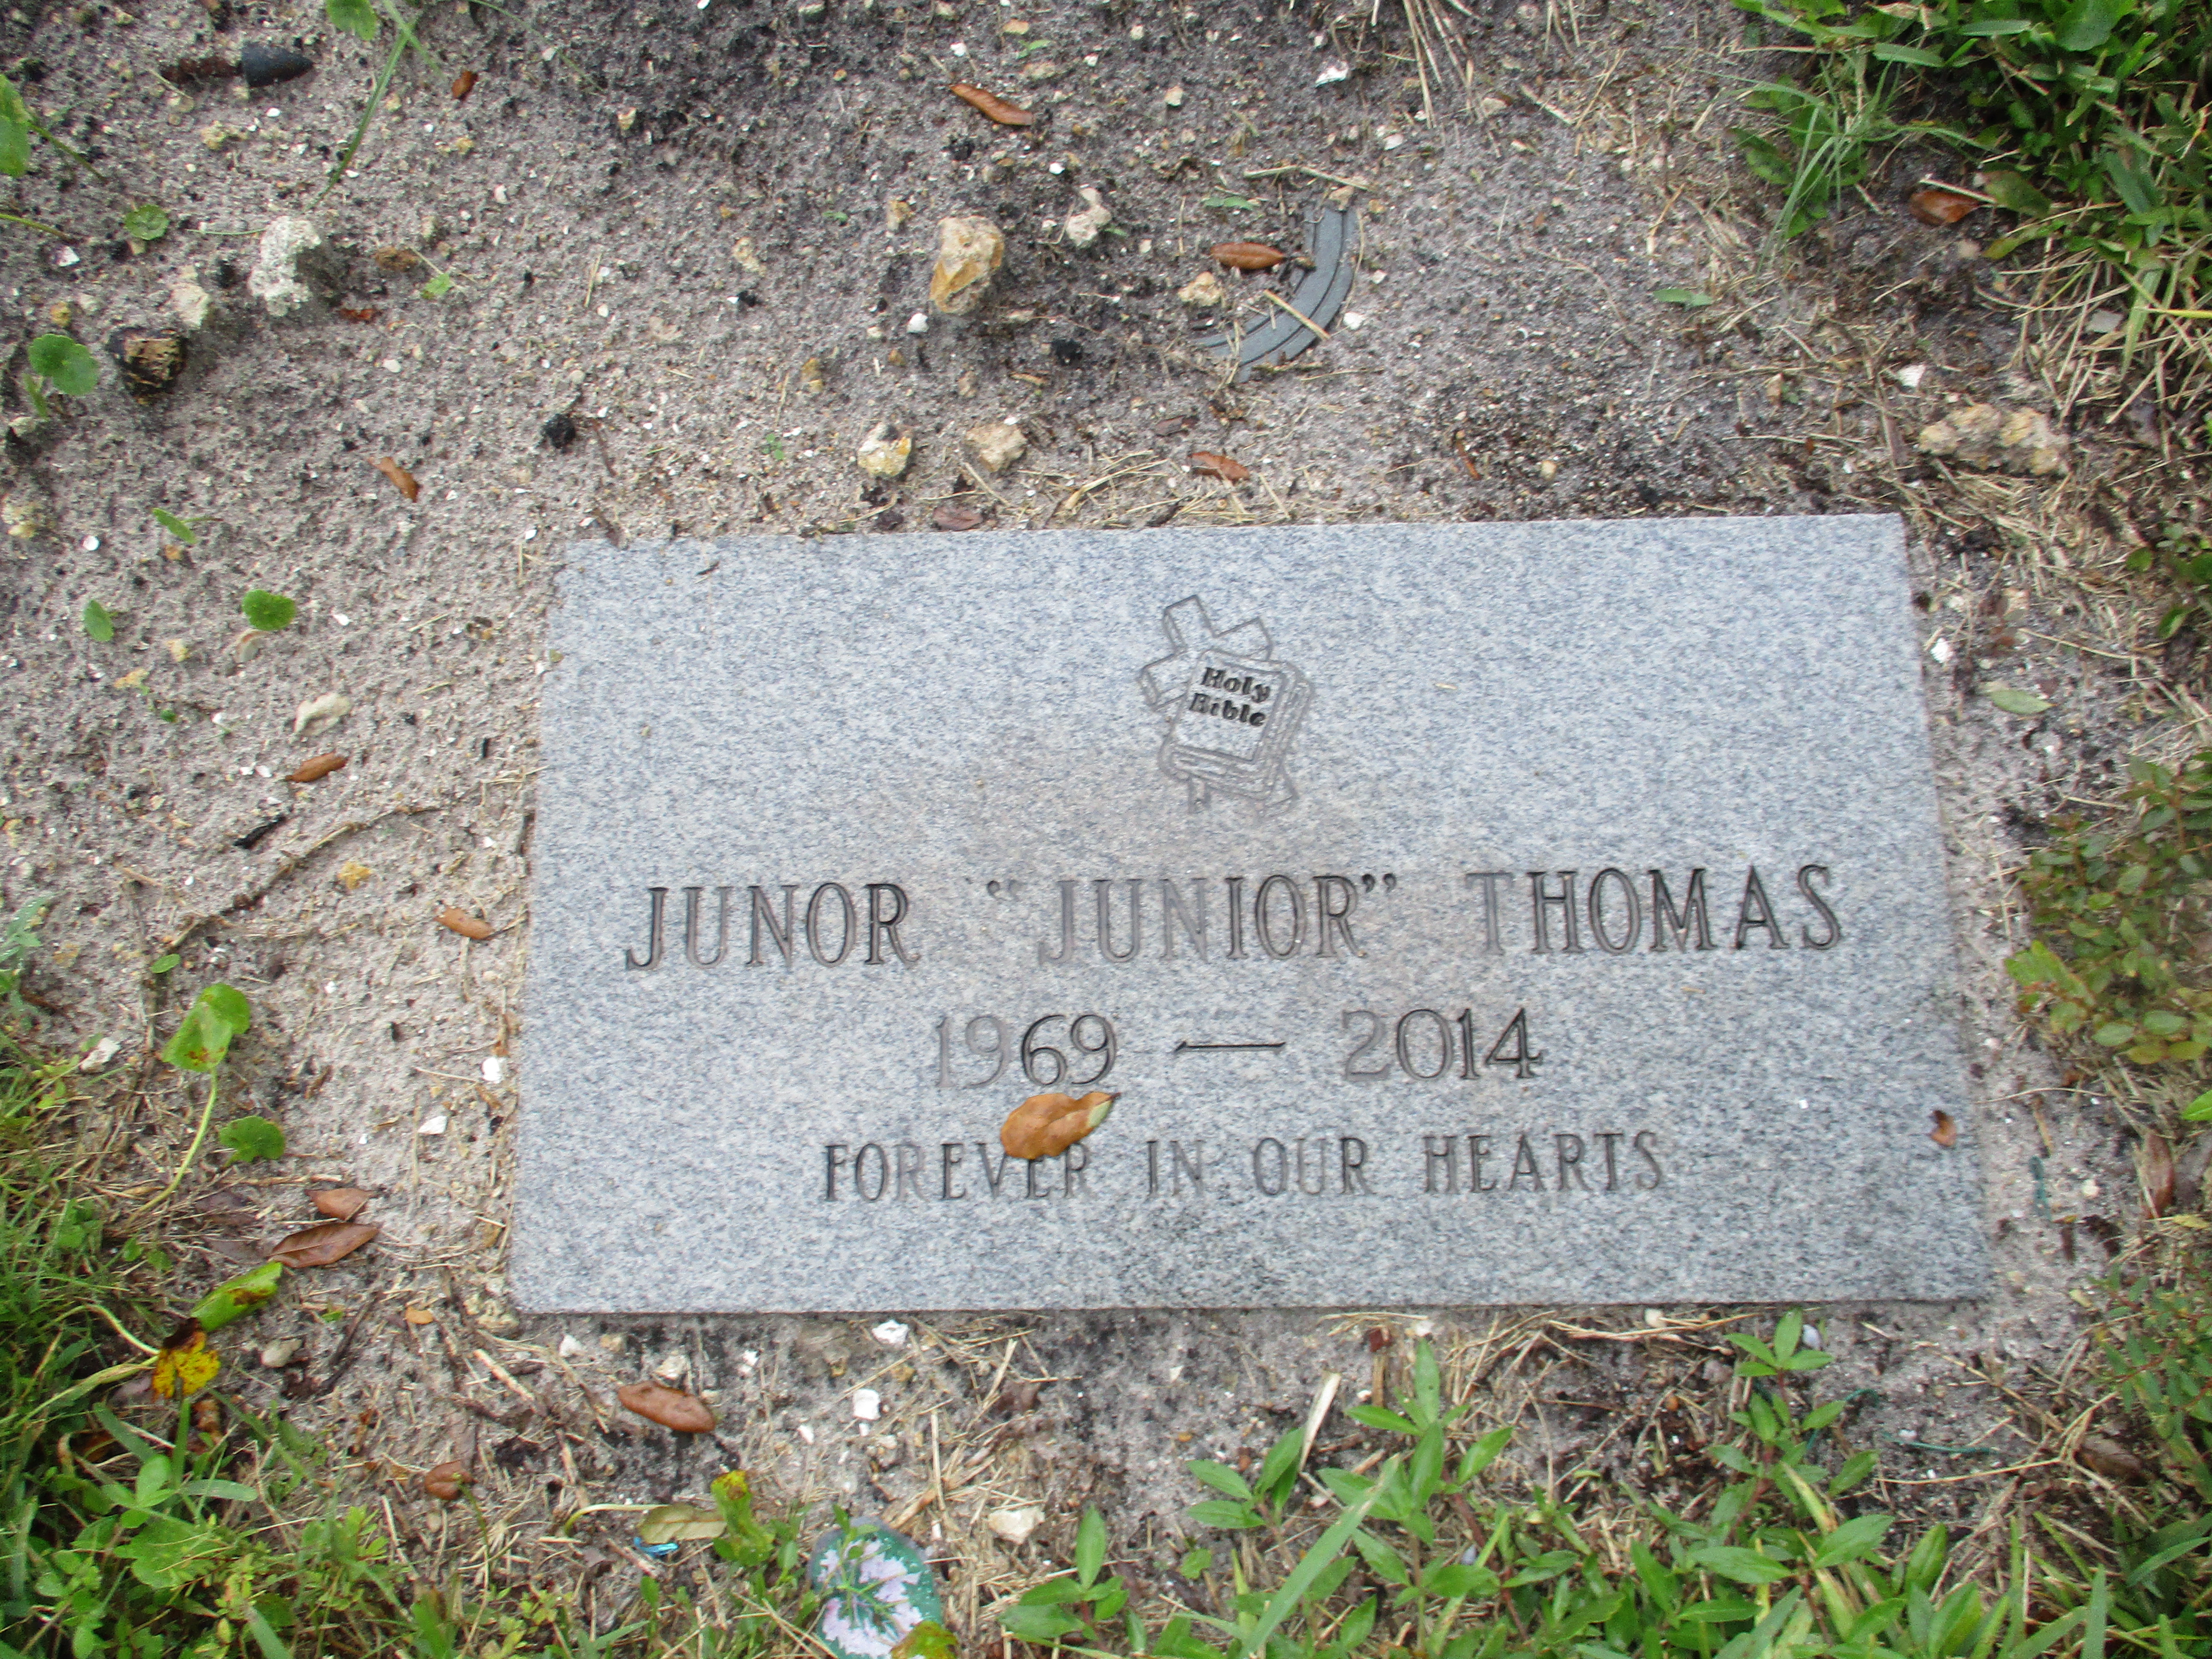 Junor "Junior" Thomas